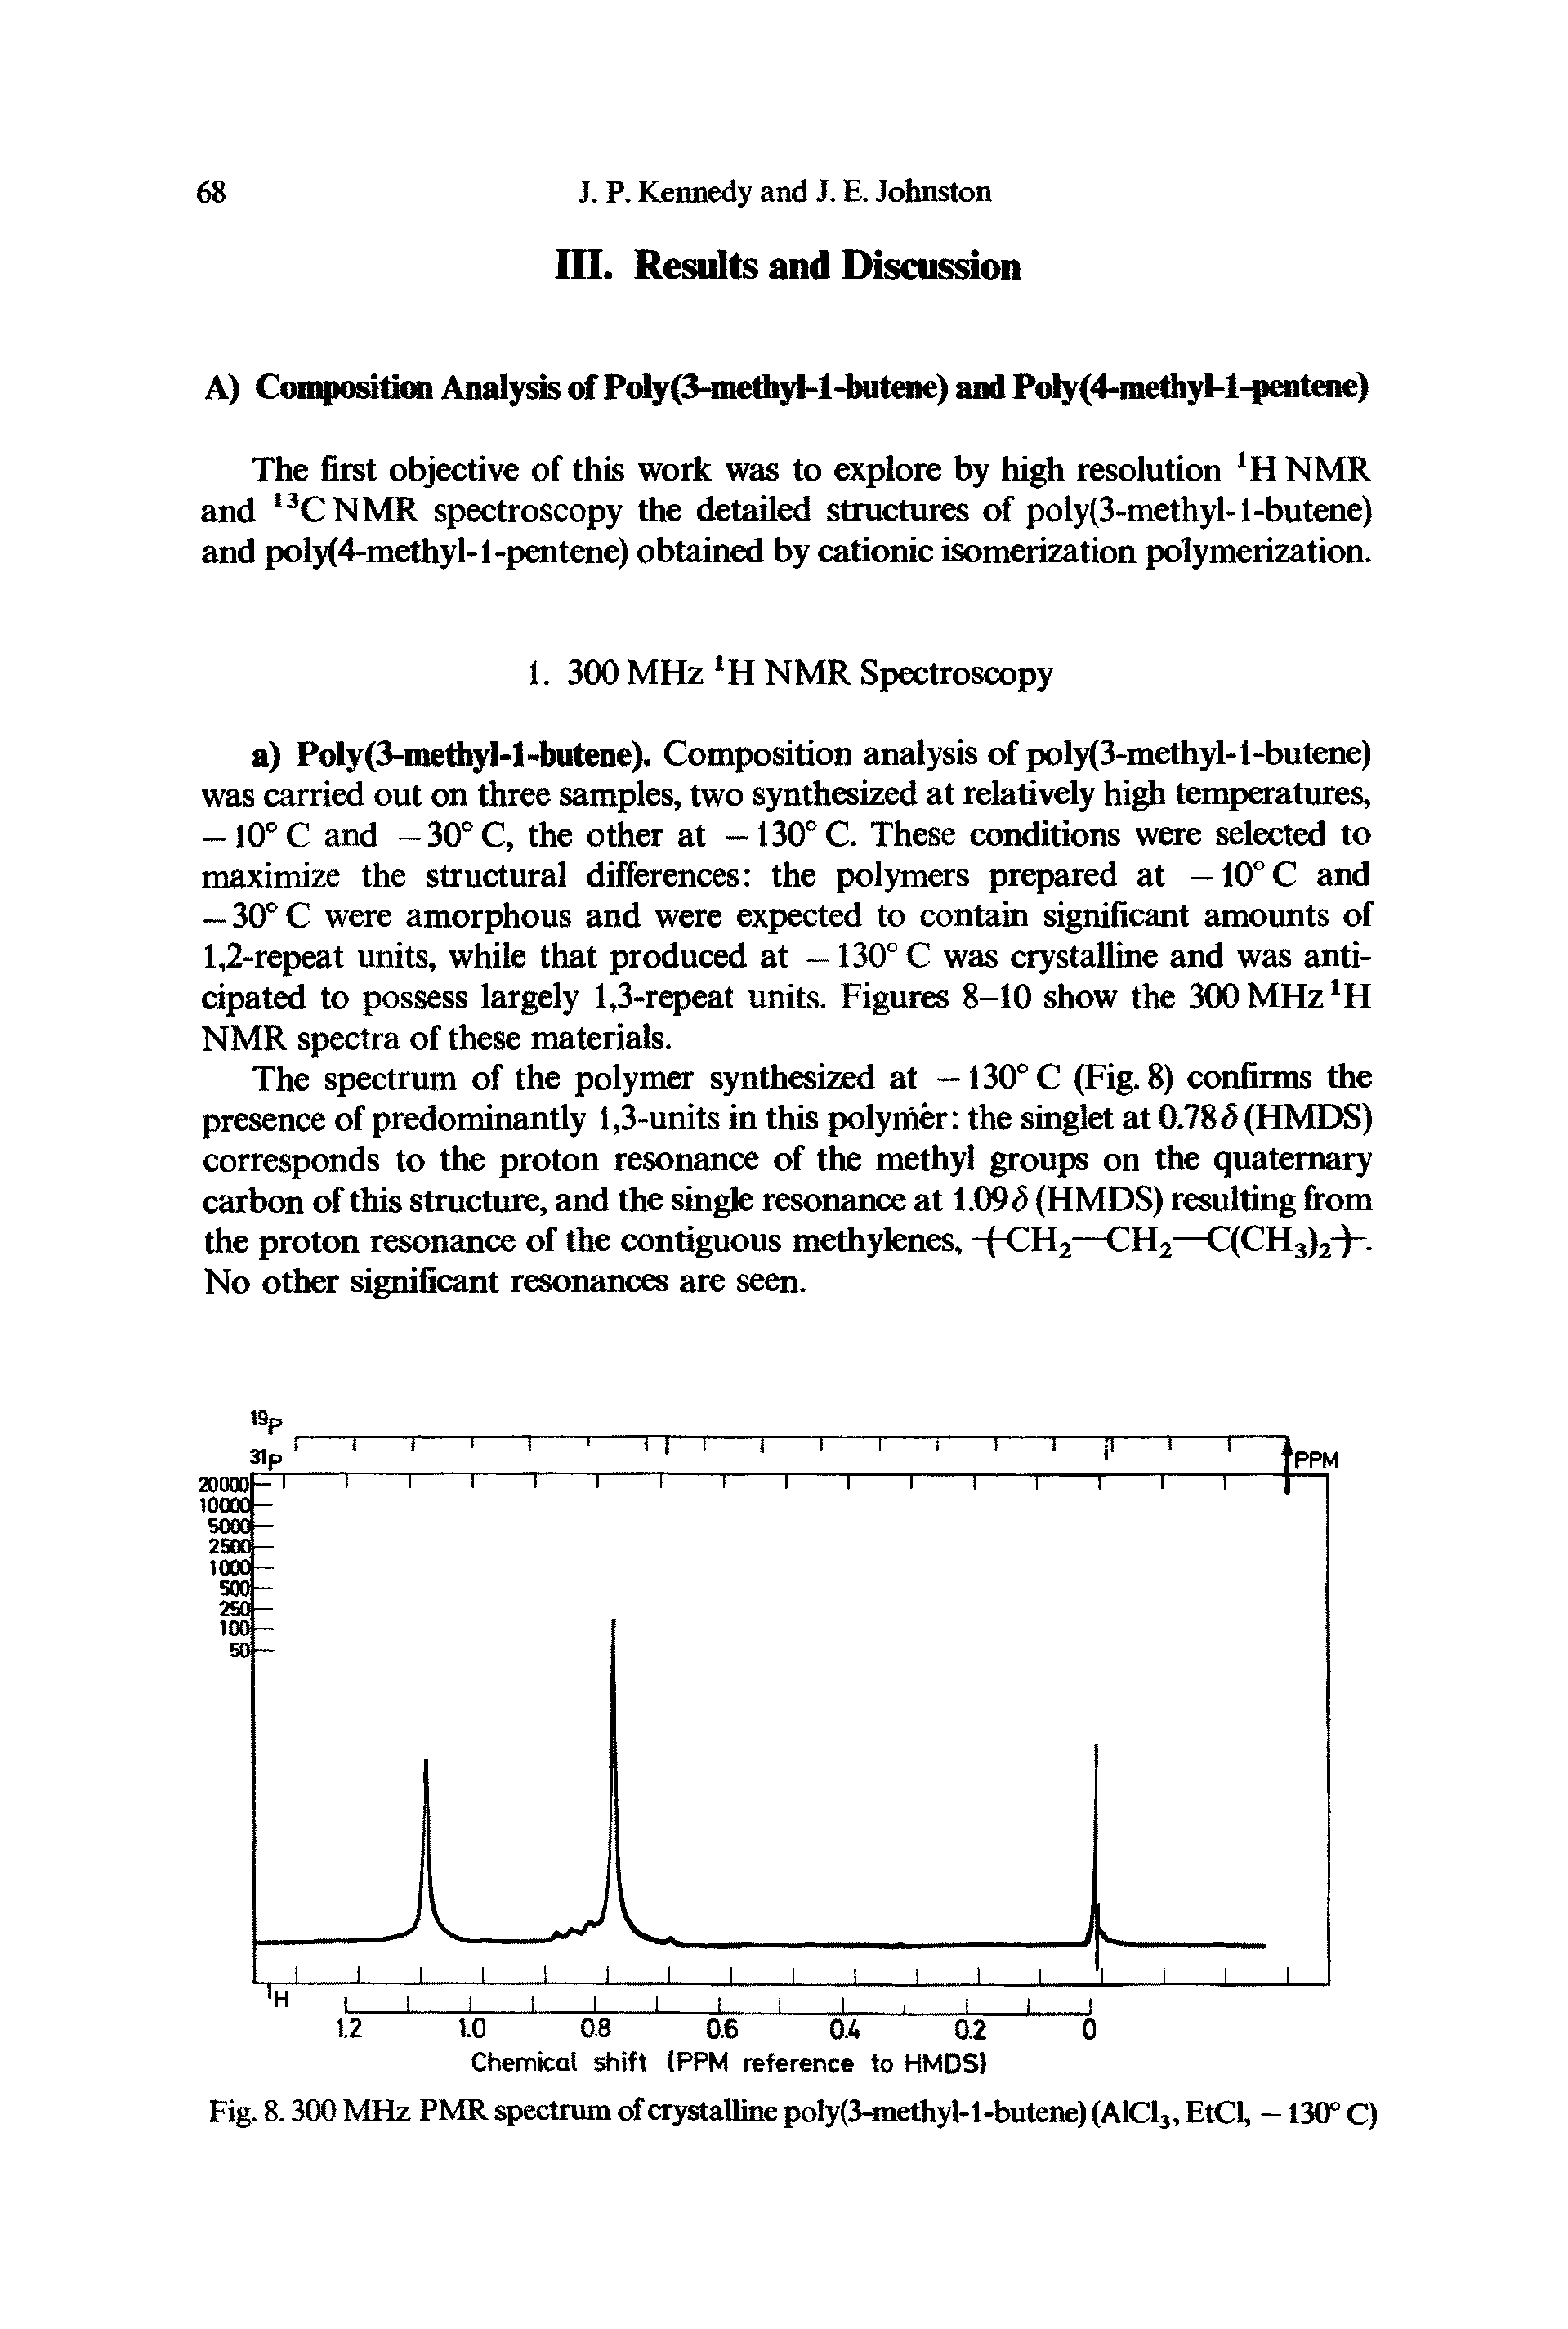 Fig. 8.300 MHz PMR spectrum of crystalline poly(3-methyl-l-butene) (A1C13, EtCl, —130° C)...